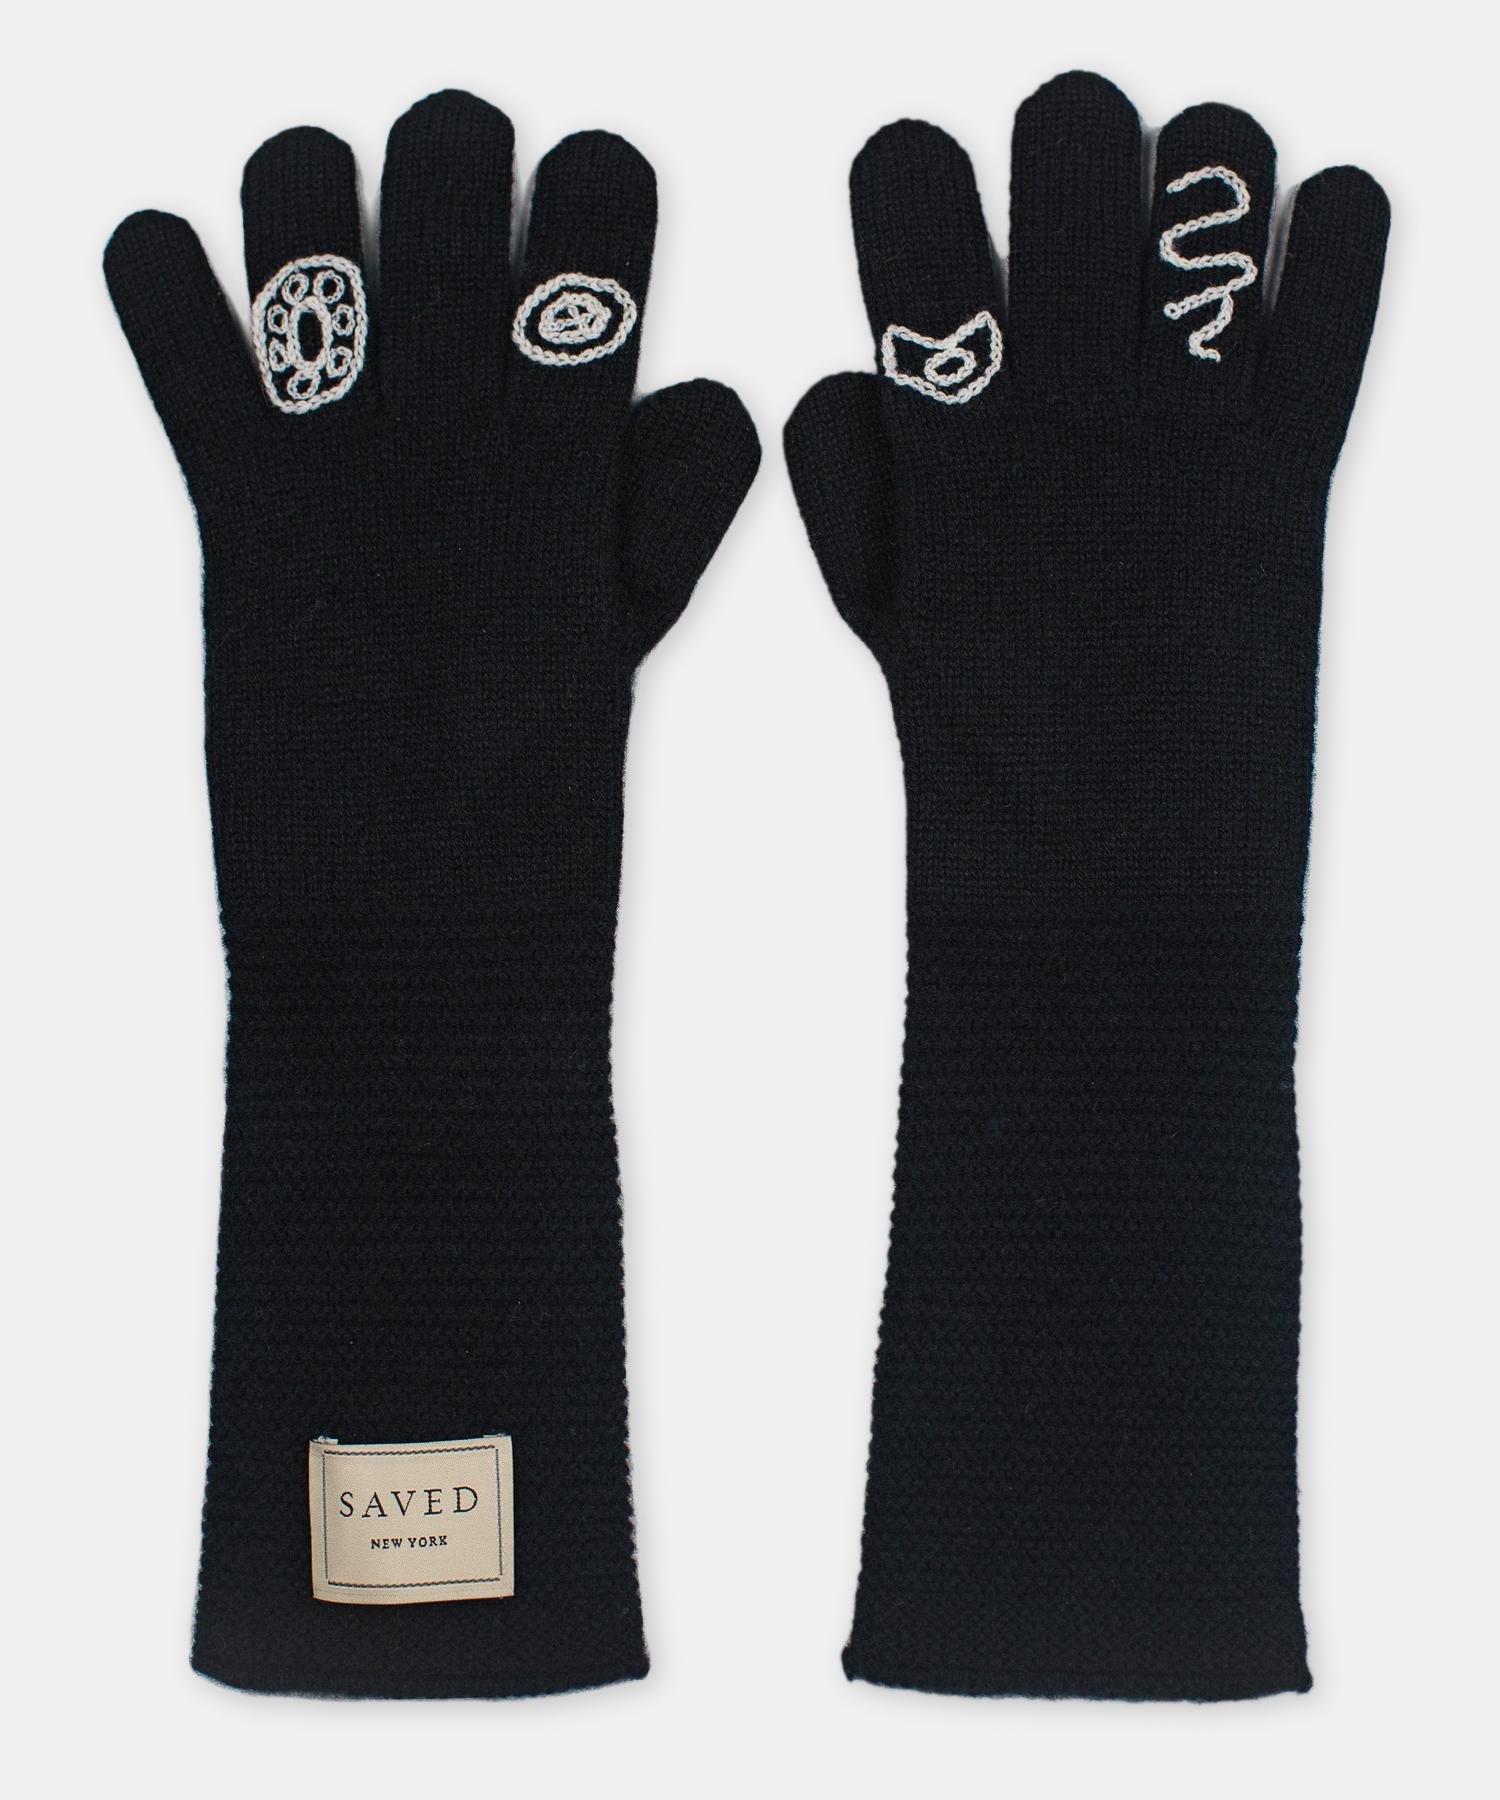 Mongolian Black Opera Gloves by Saved, New York